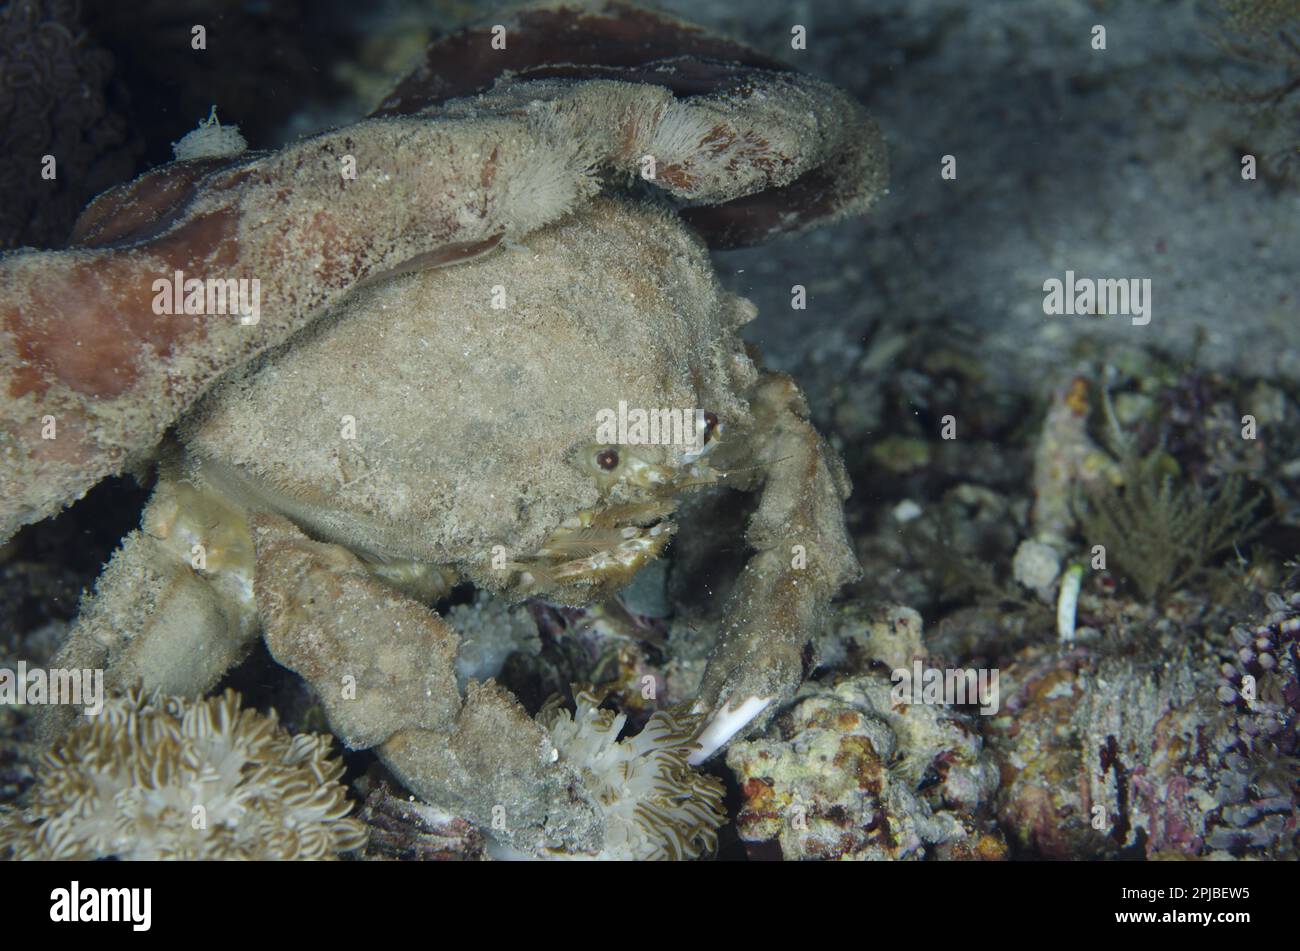 Sleepy sponge crab (Dromia dormia), Archipelago, Lesser Sunda Islands, Indonesia, November, Sponge crabs, Other animals, Crabs, Crustaceans, Animals Stock Photo